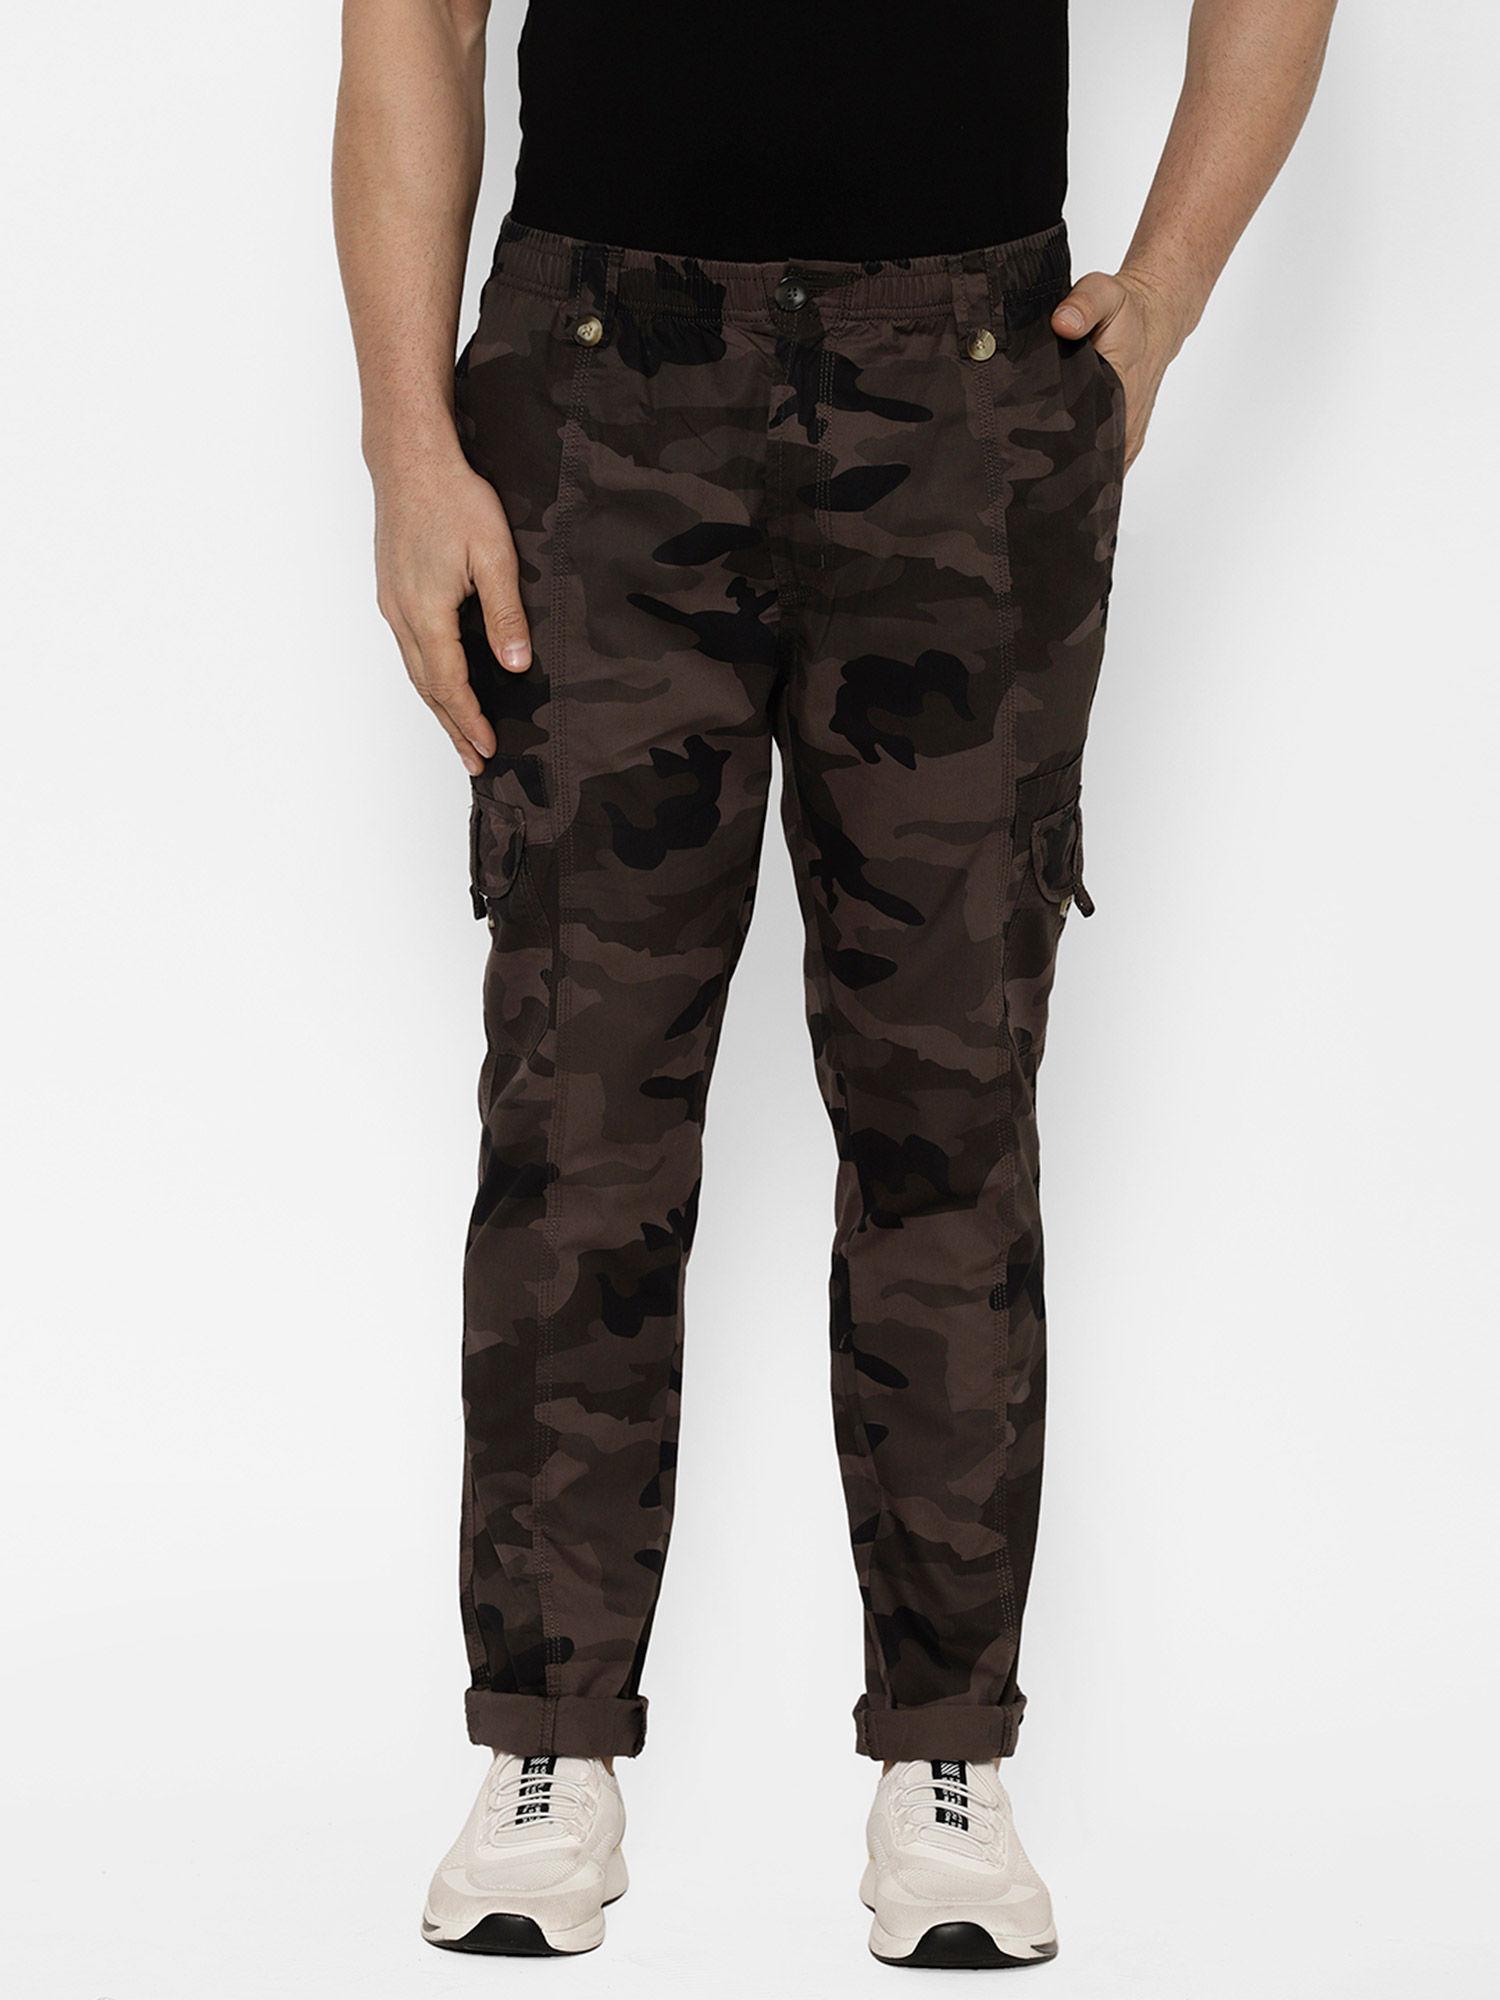 men's-cotton-black-elasticated-camouflage-printed-cargo